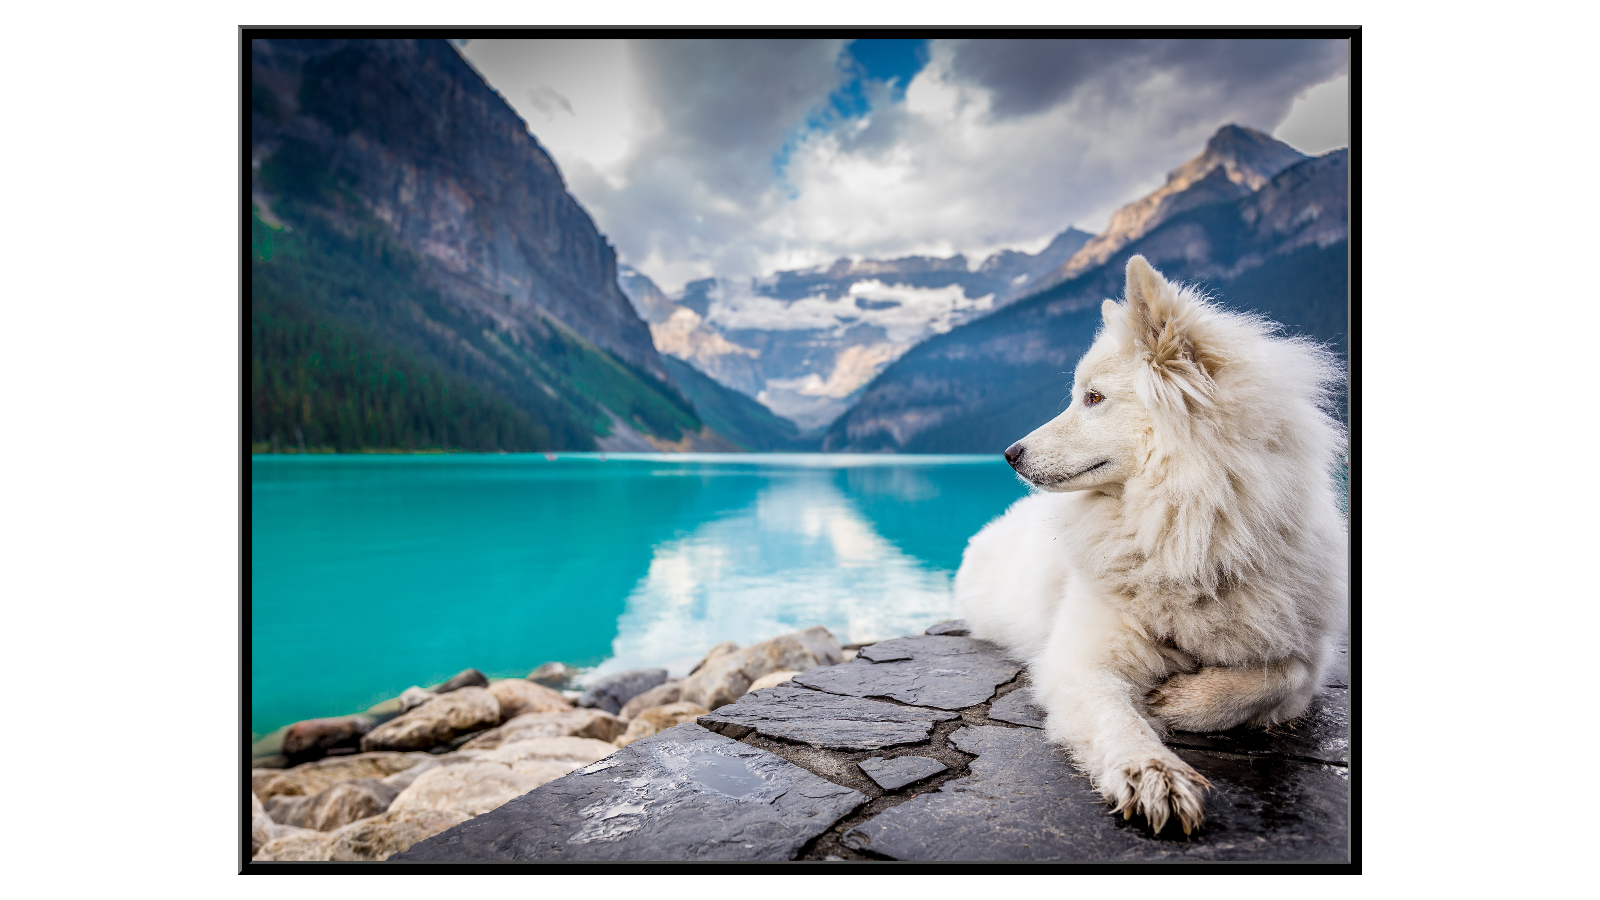 Dog admiring the mountain landscape